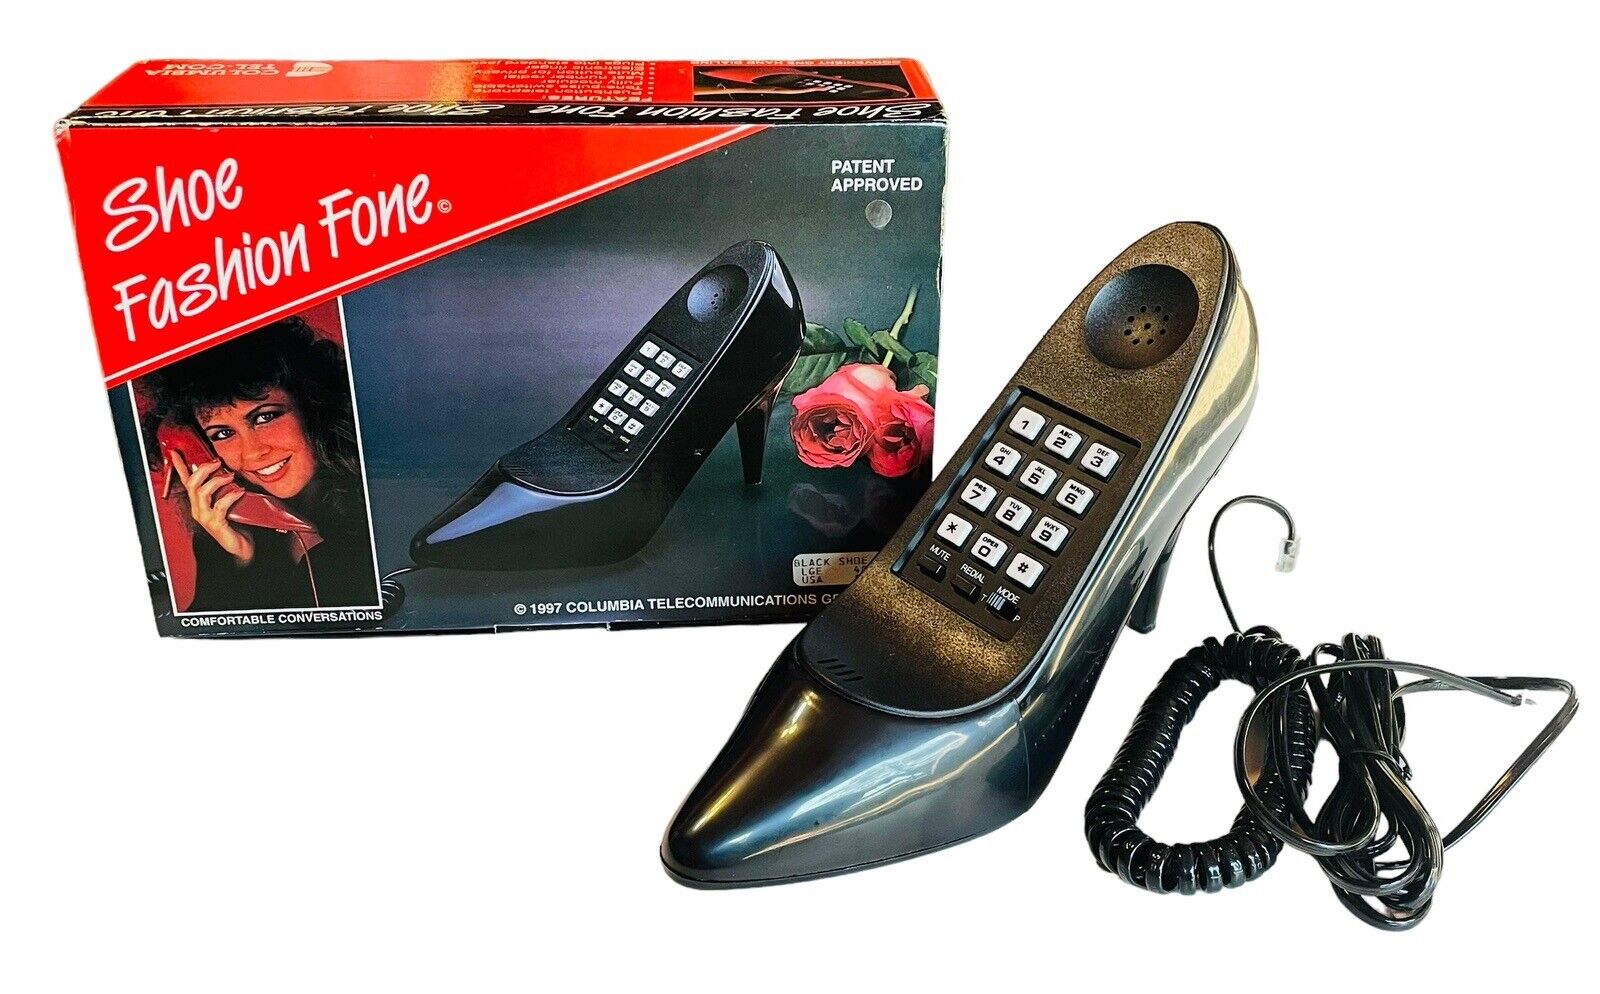 Retro 1987 Columbia Telecom Fashion Phone High Heel Shoe Telephone Black W/ Box